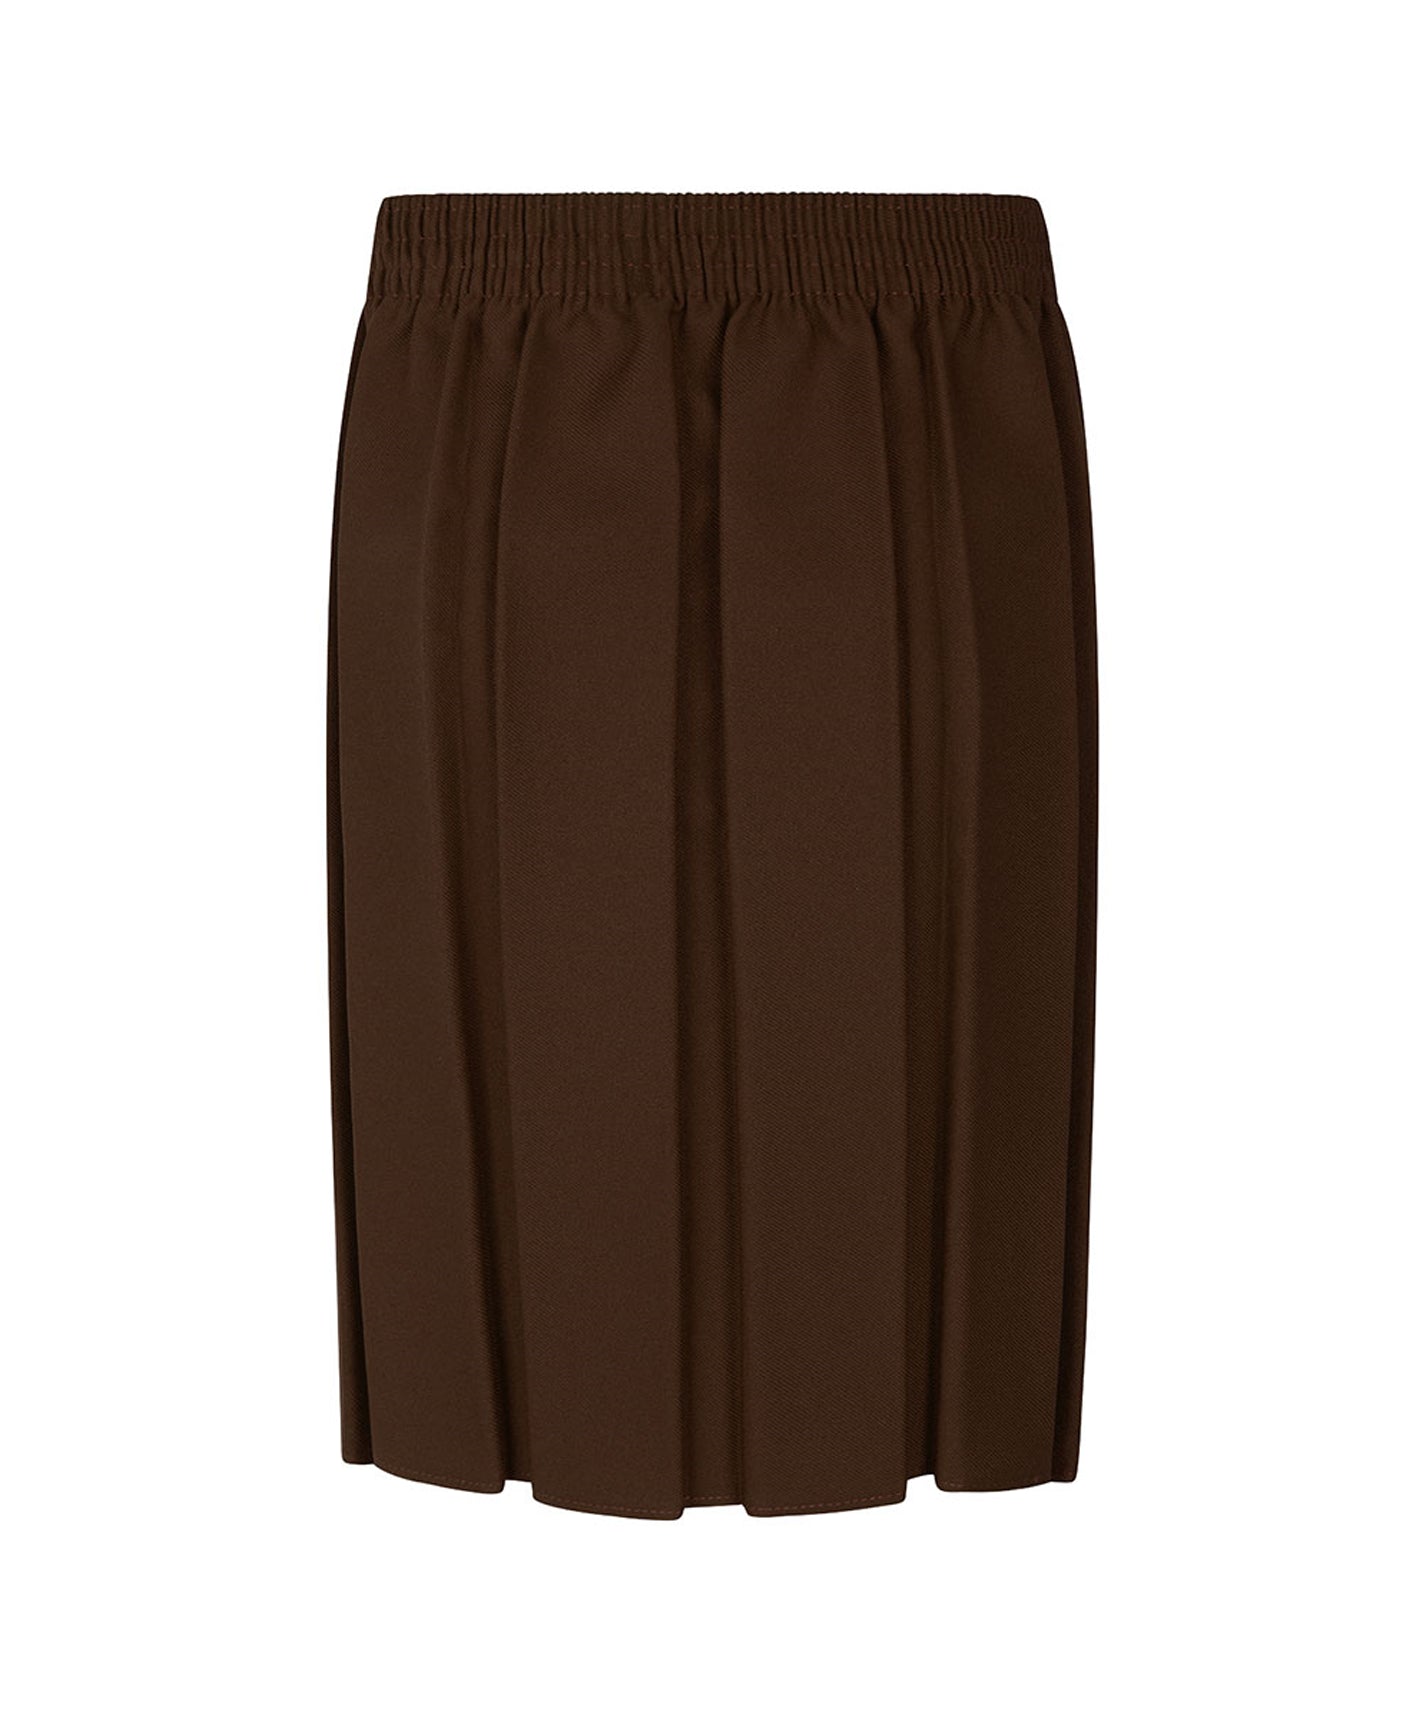 Girls' Box Pleat School Skirt - Brown